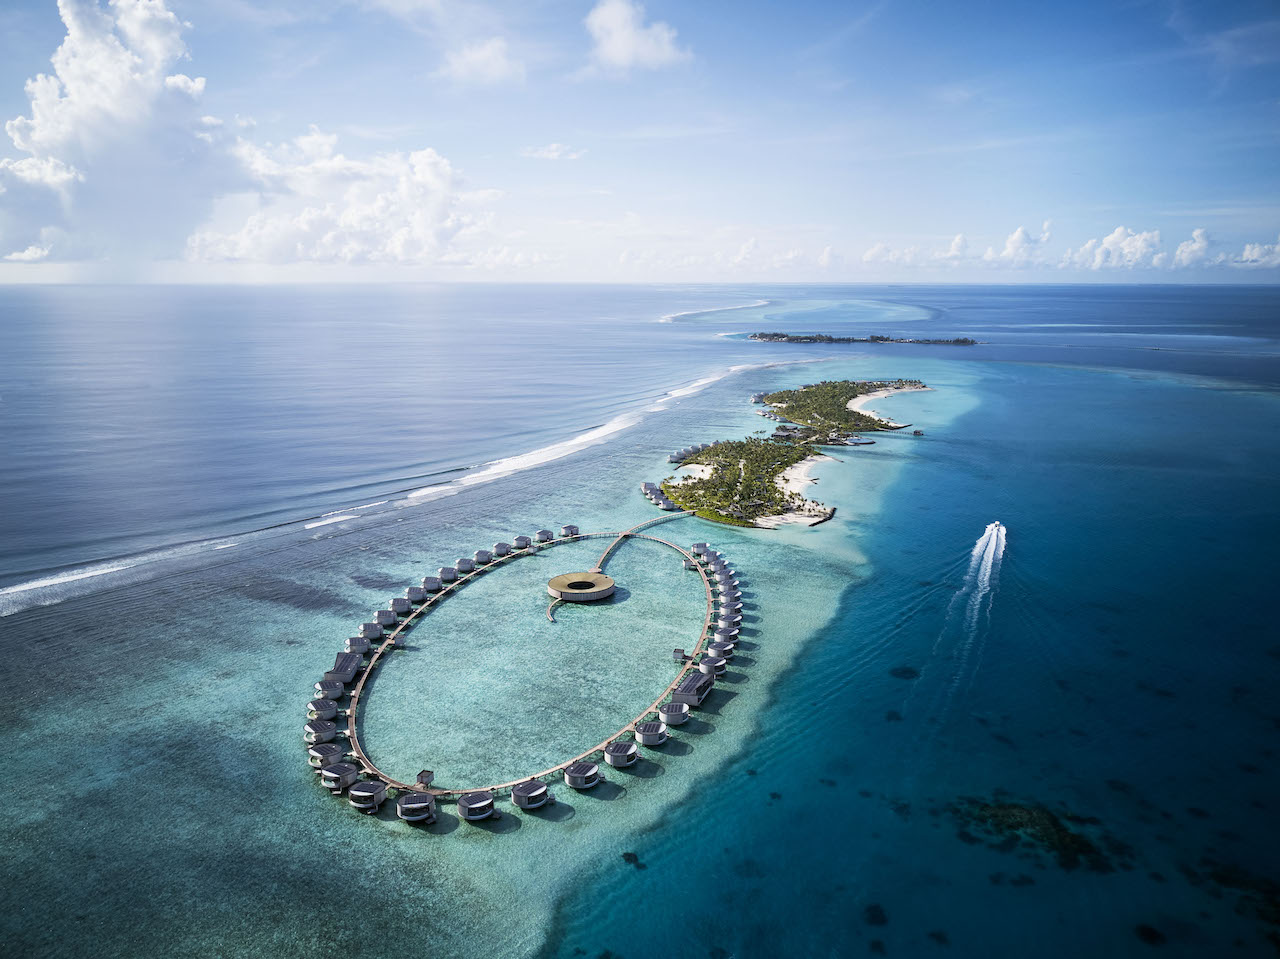 The Ritz-Carlton Maldives, Fari Islands presents a culinary exploration of Germany’s legendary Black Forest with chef patron Viktoria Fuchs this November.